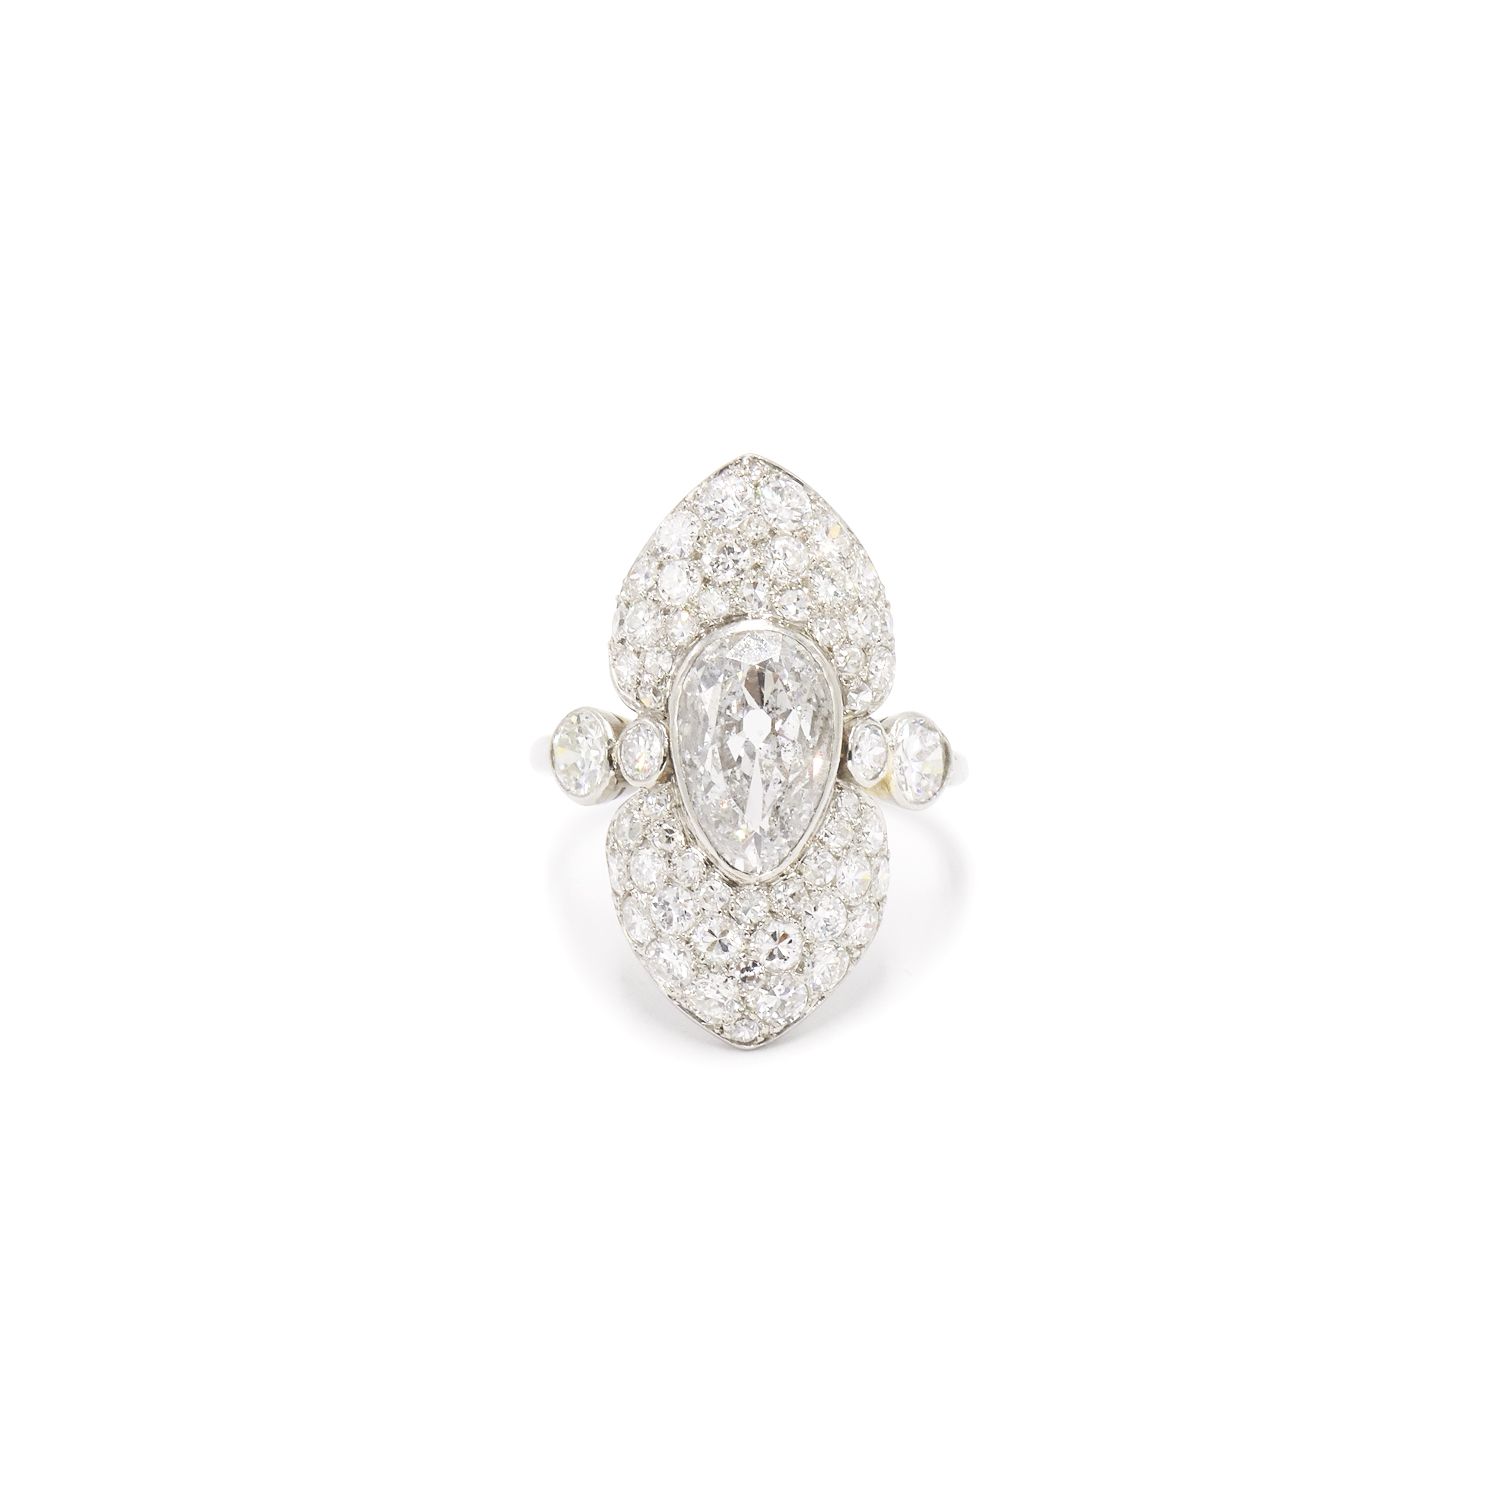 Art Deco Antique Pear Shape Diamond Ring by Cartier Style F-40424-FL-0-0